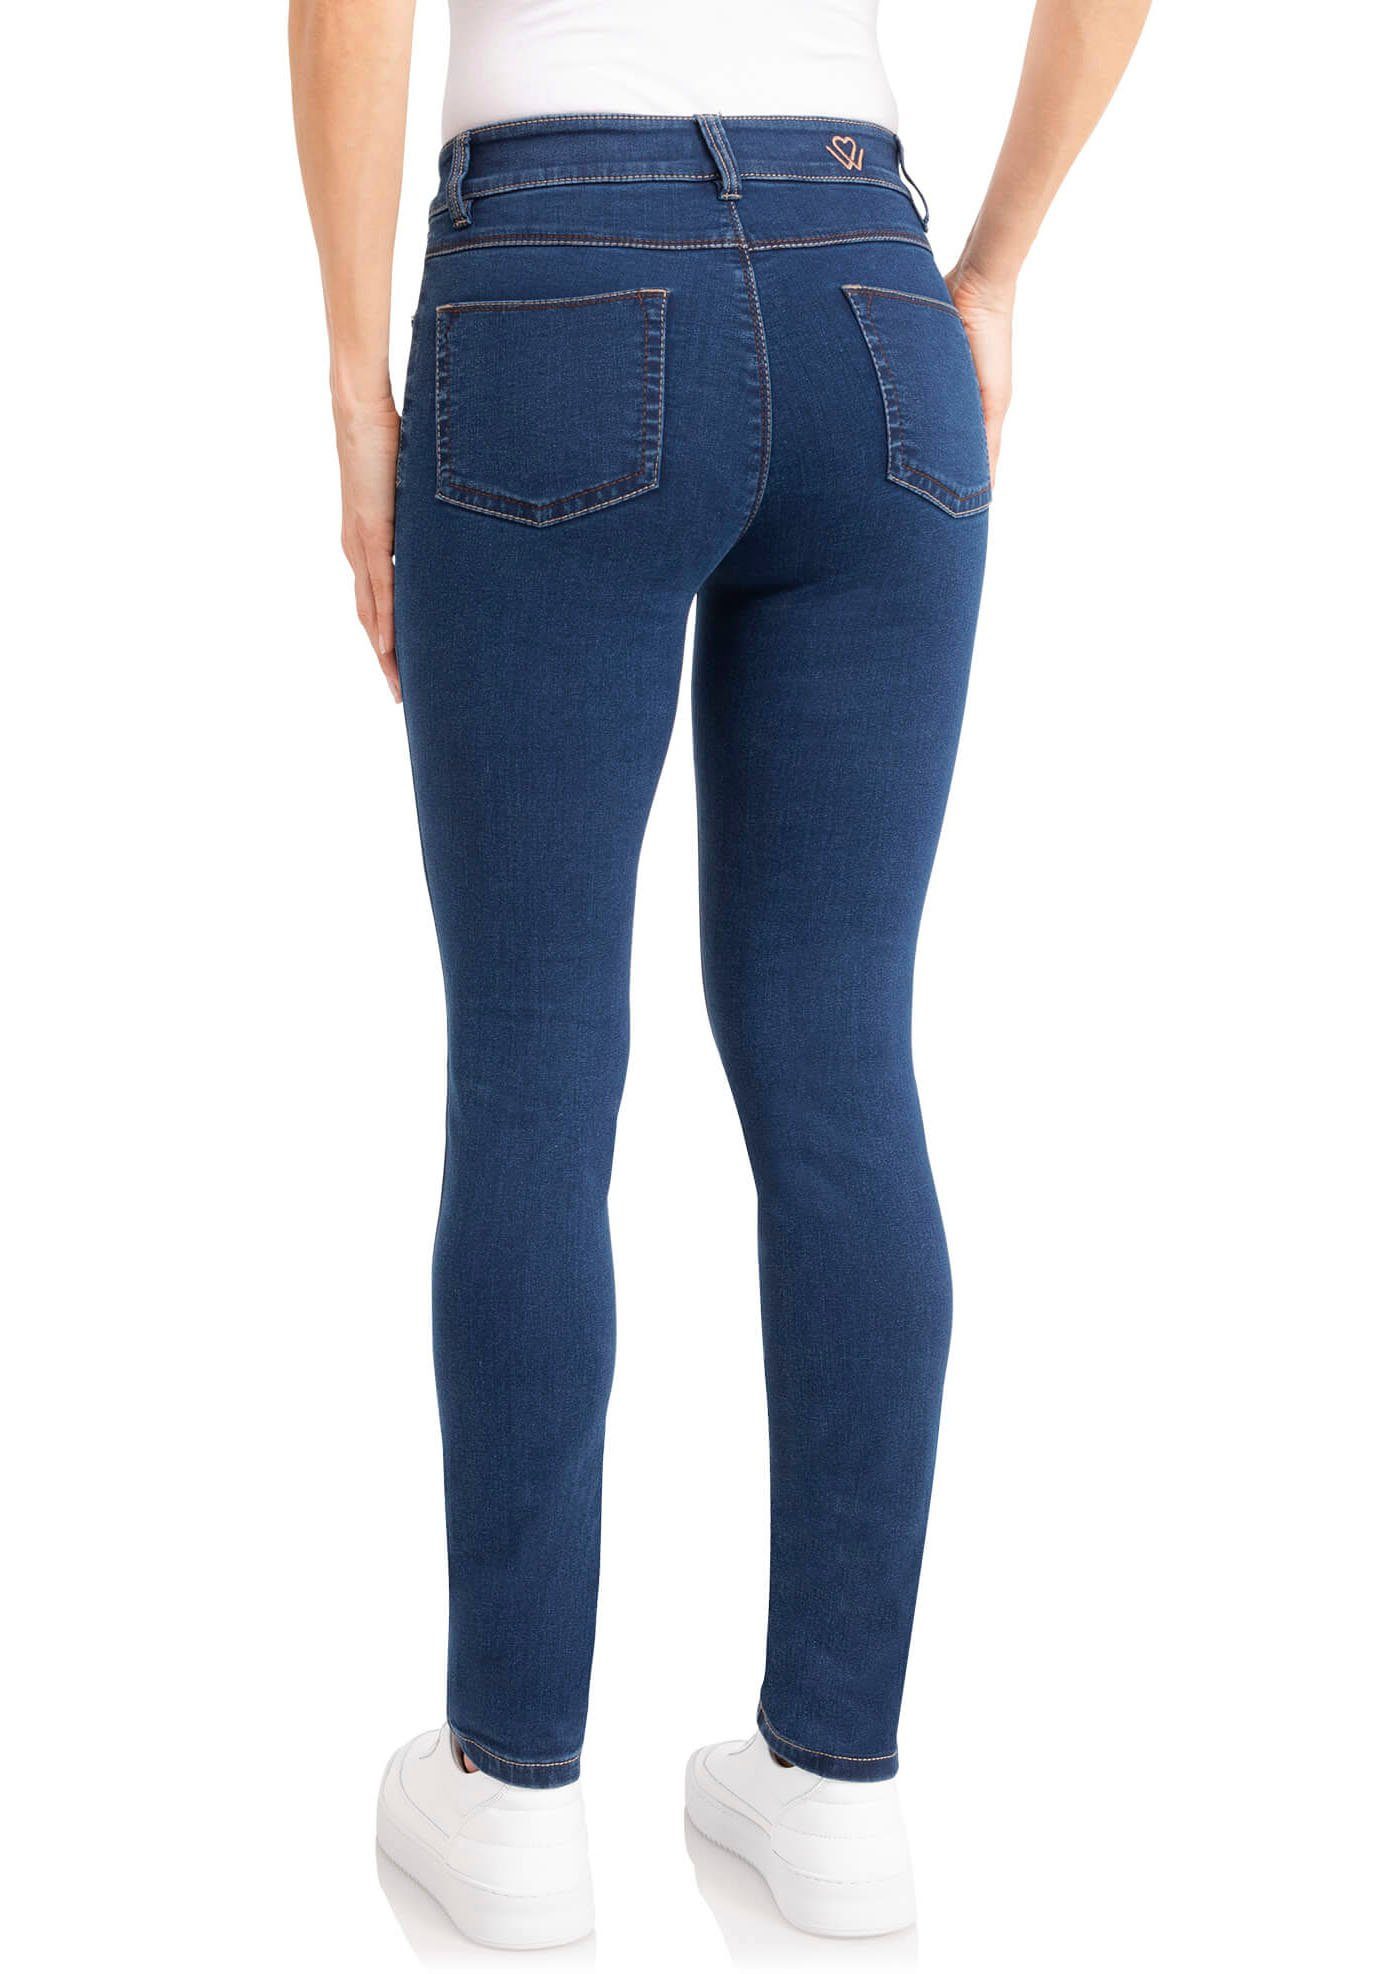 wonderjeans Slim-fit-Jeans Classic-Slim Klassischer gerader blue stone Schnitt washed